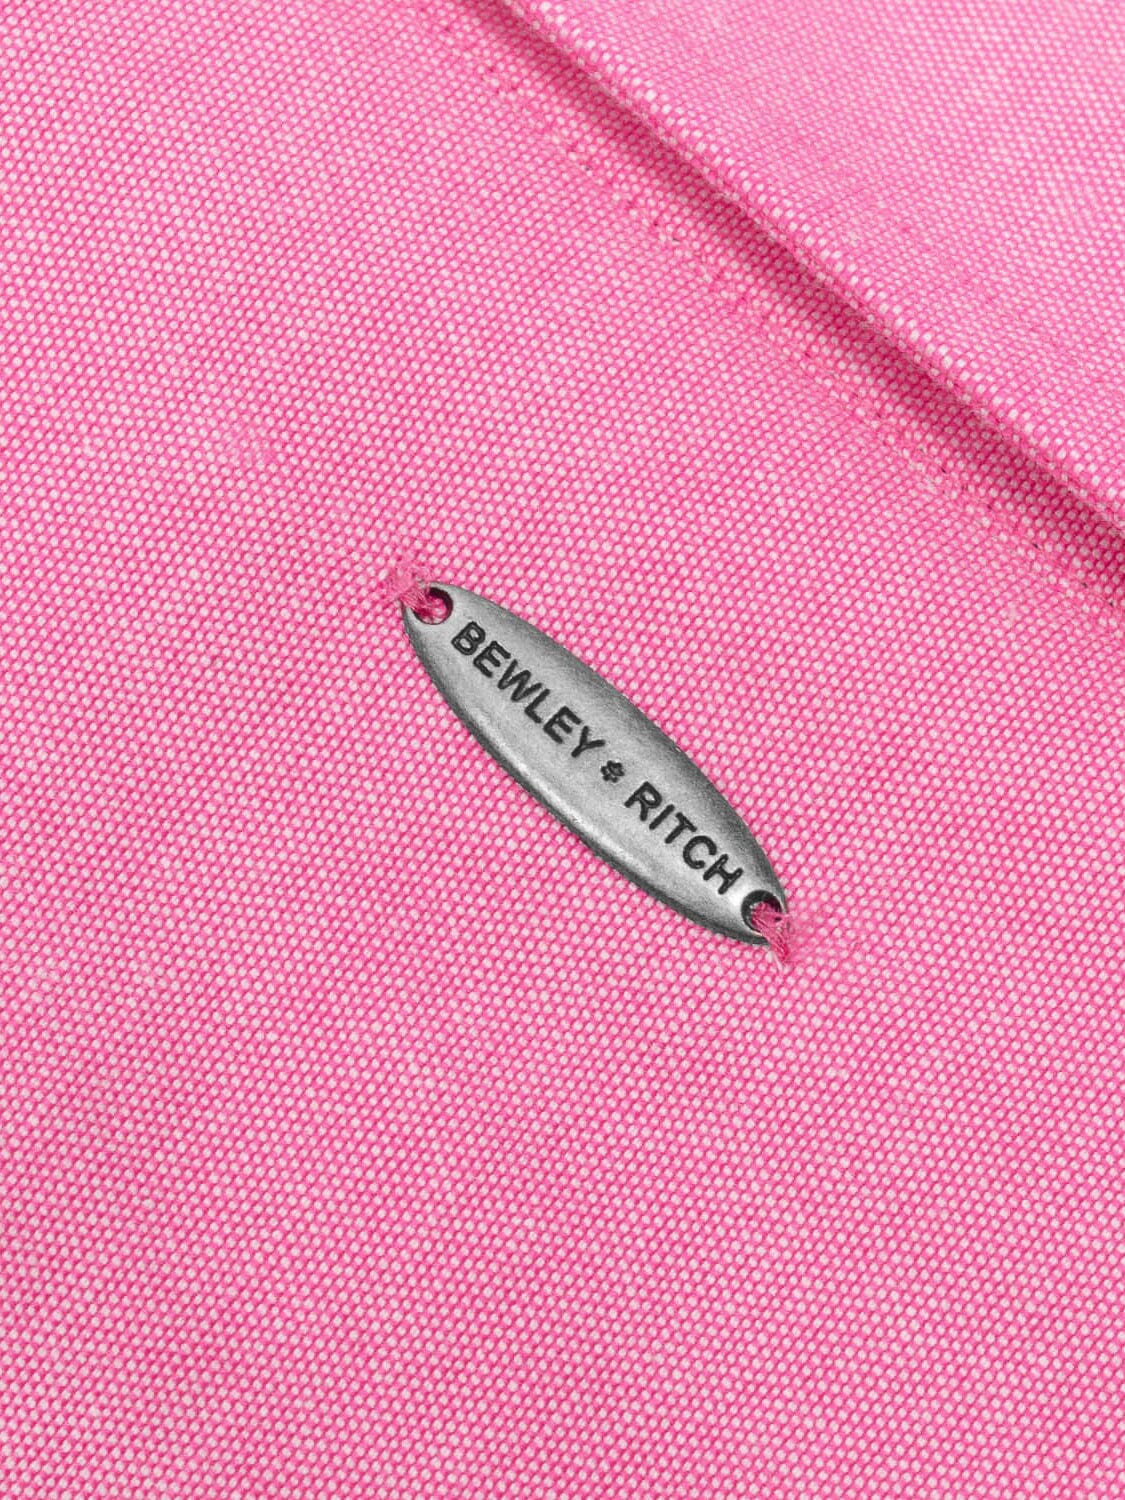 Bewley & Ritch - Aland Shirt Hot Pink